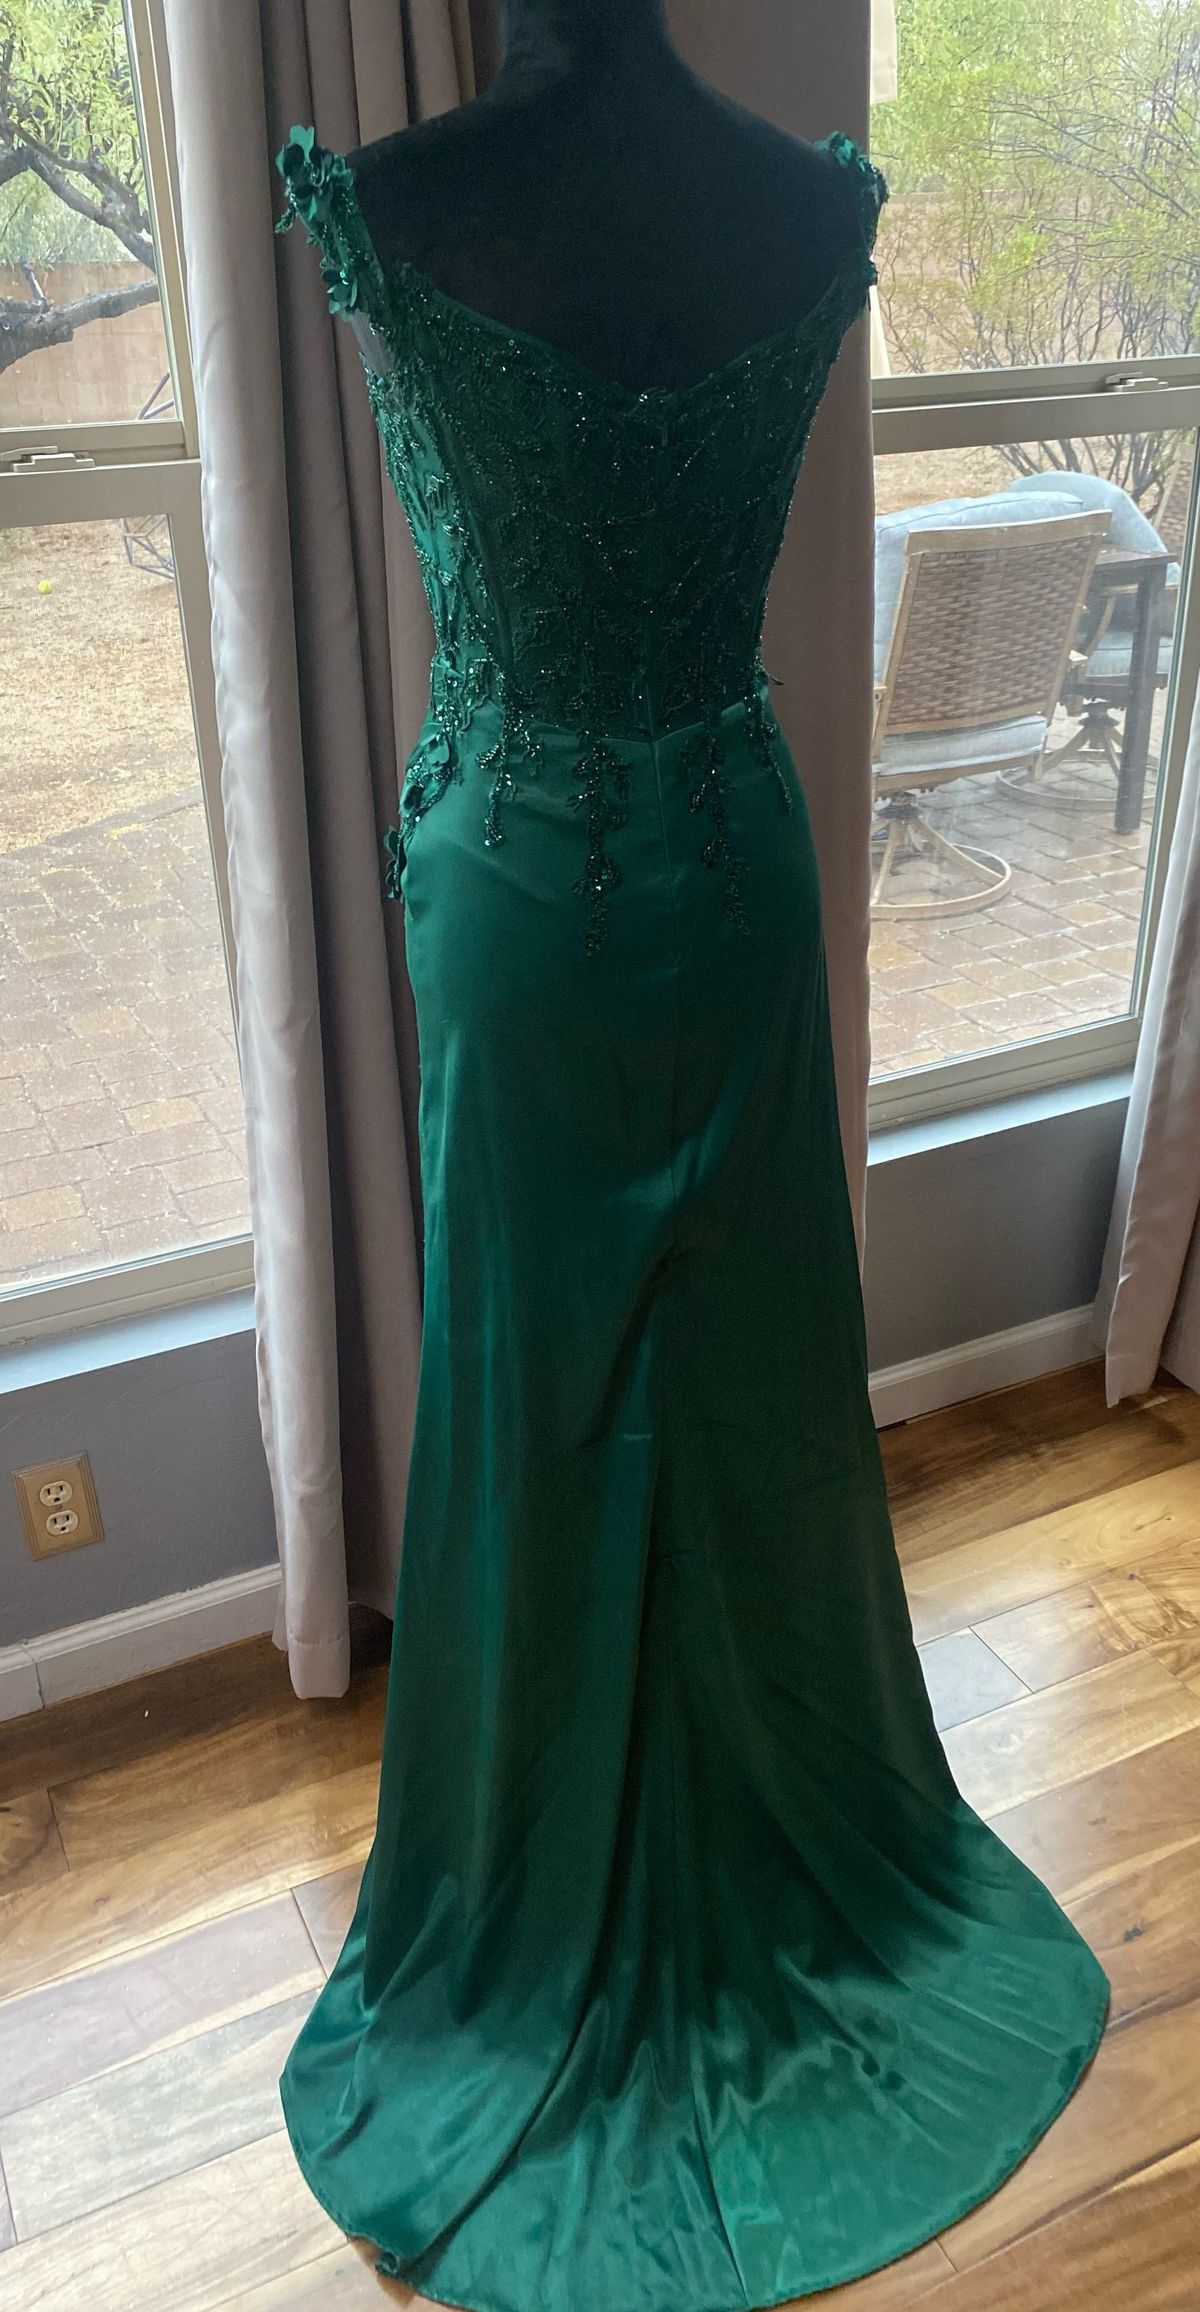 Cinderella Divine Size S Prom Off The Shoulder Emerald Green Side Slit Dress on Queenly